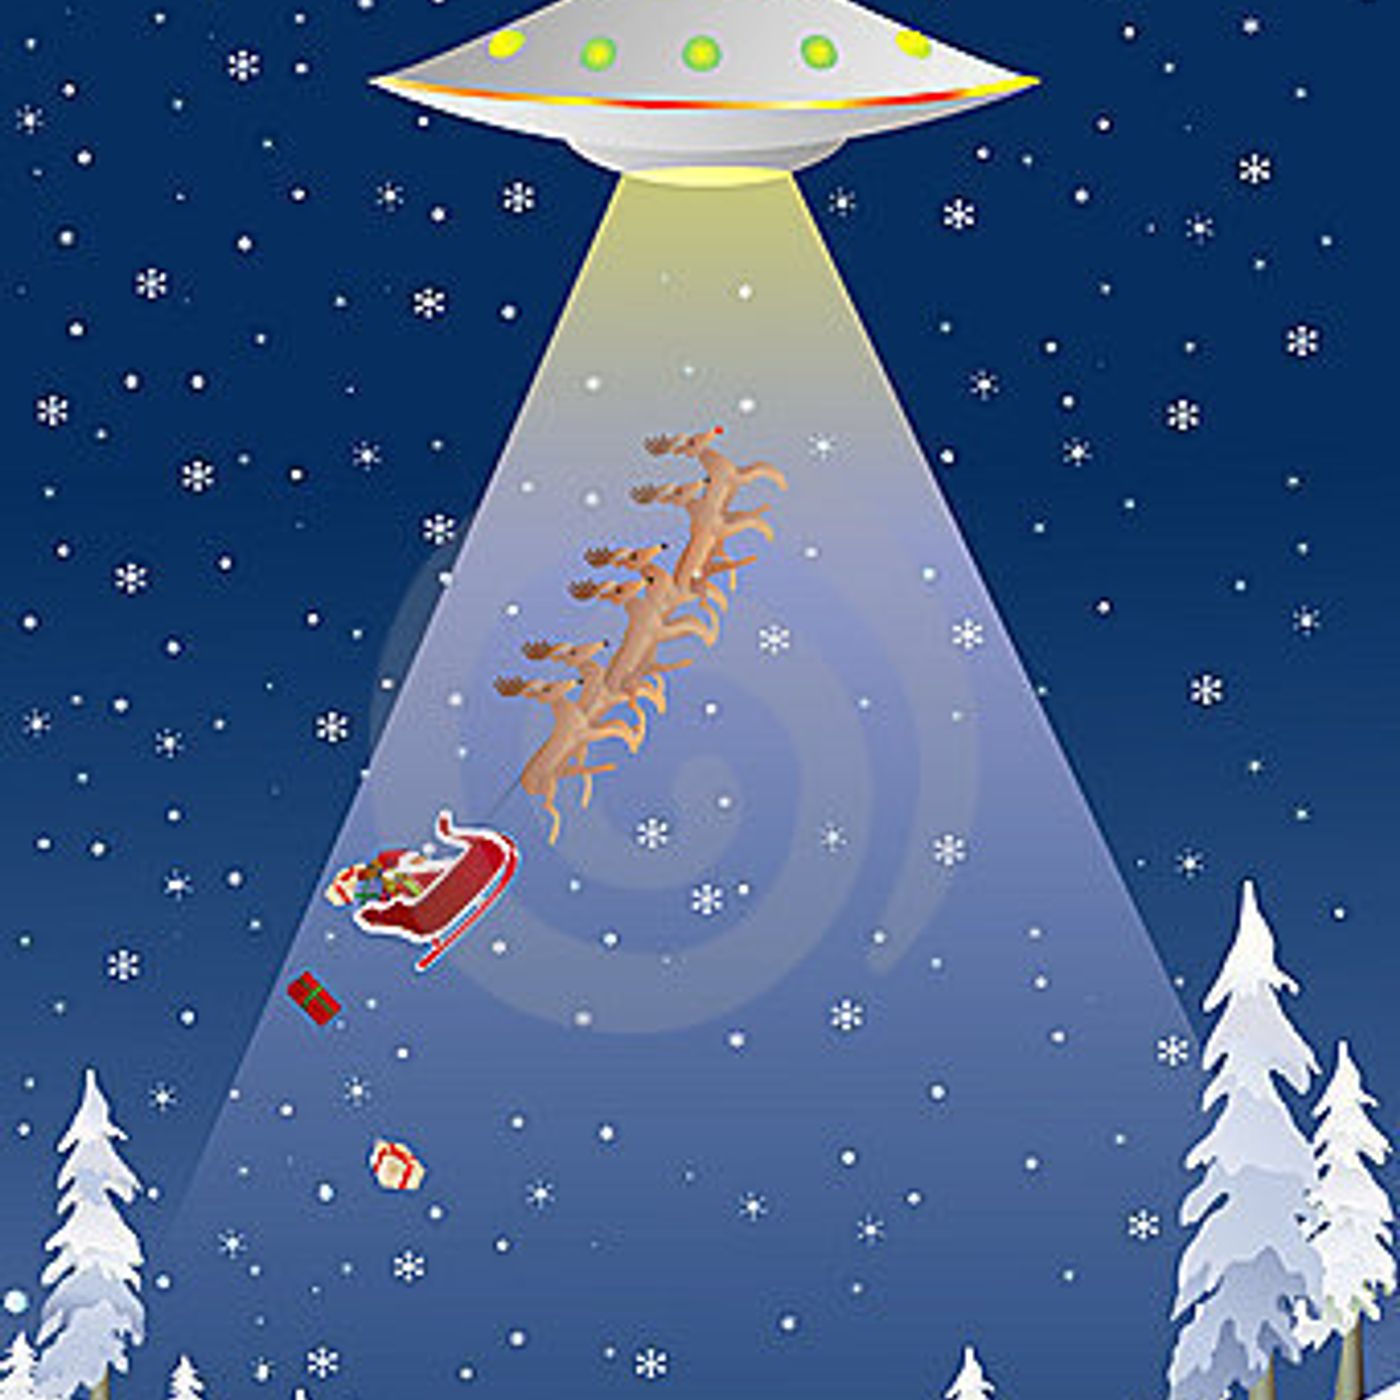 33: Alien Nation's Christmas Hits!